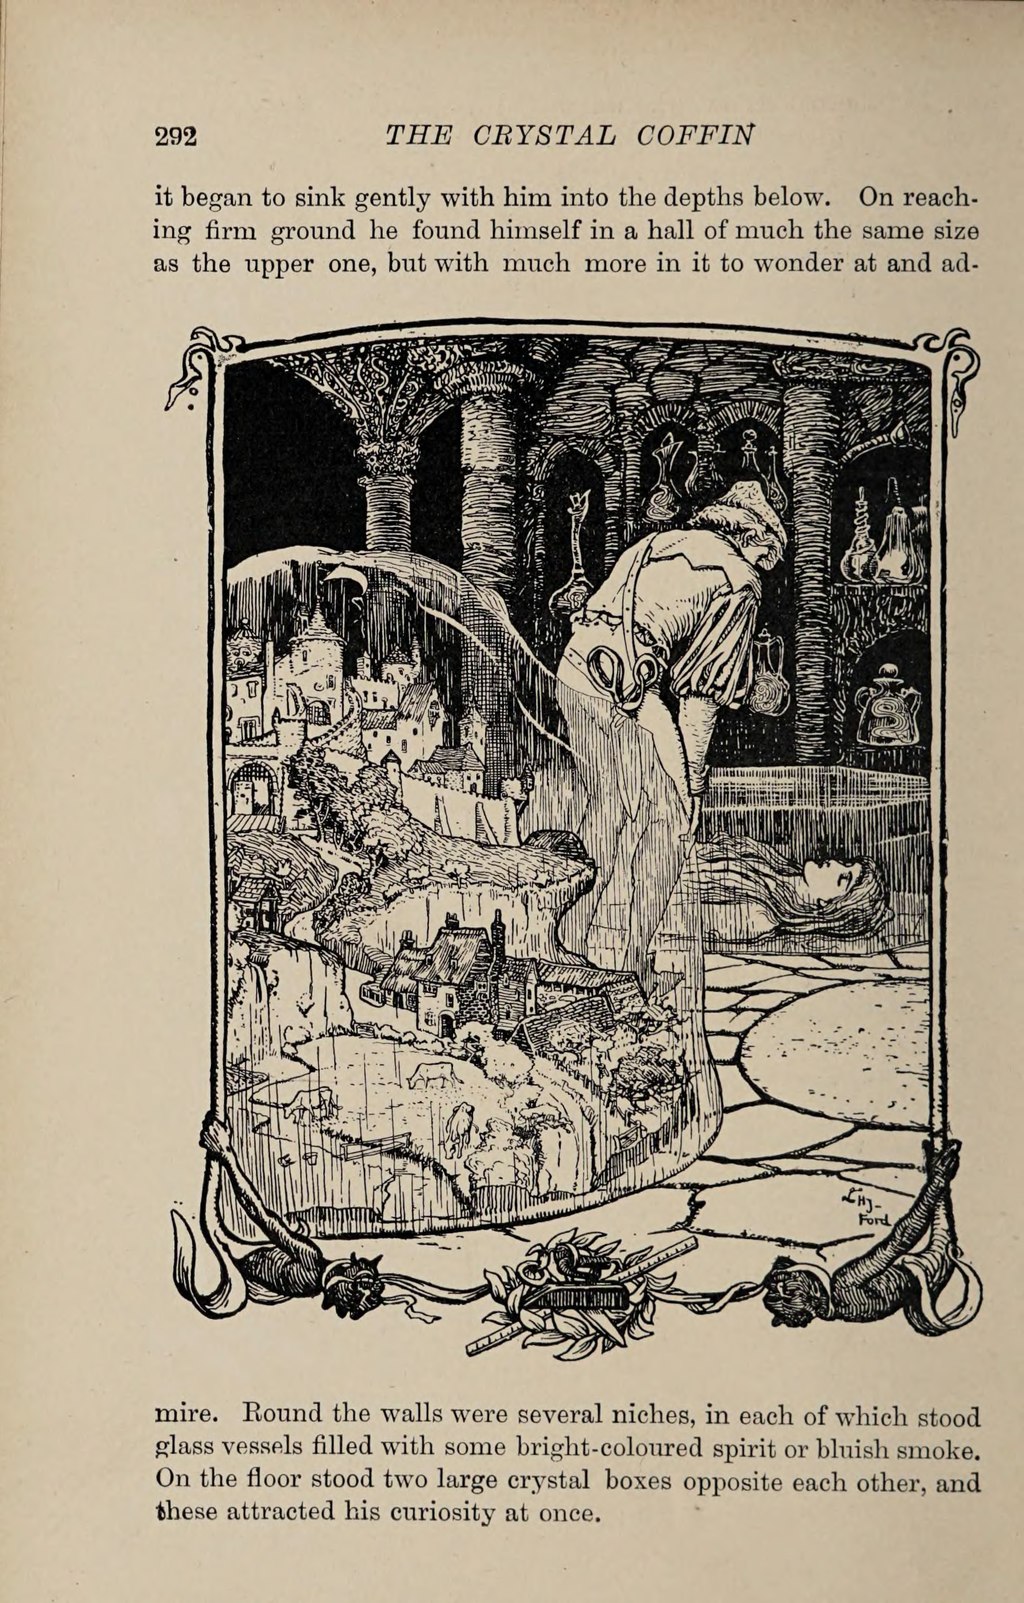 The Big Sketch Book. 1902